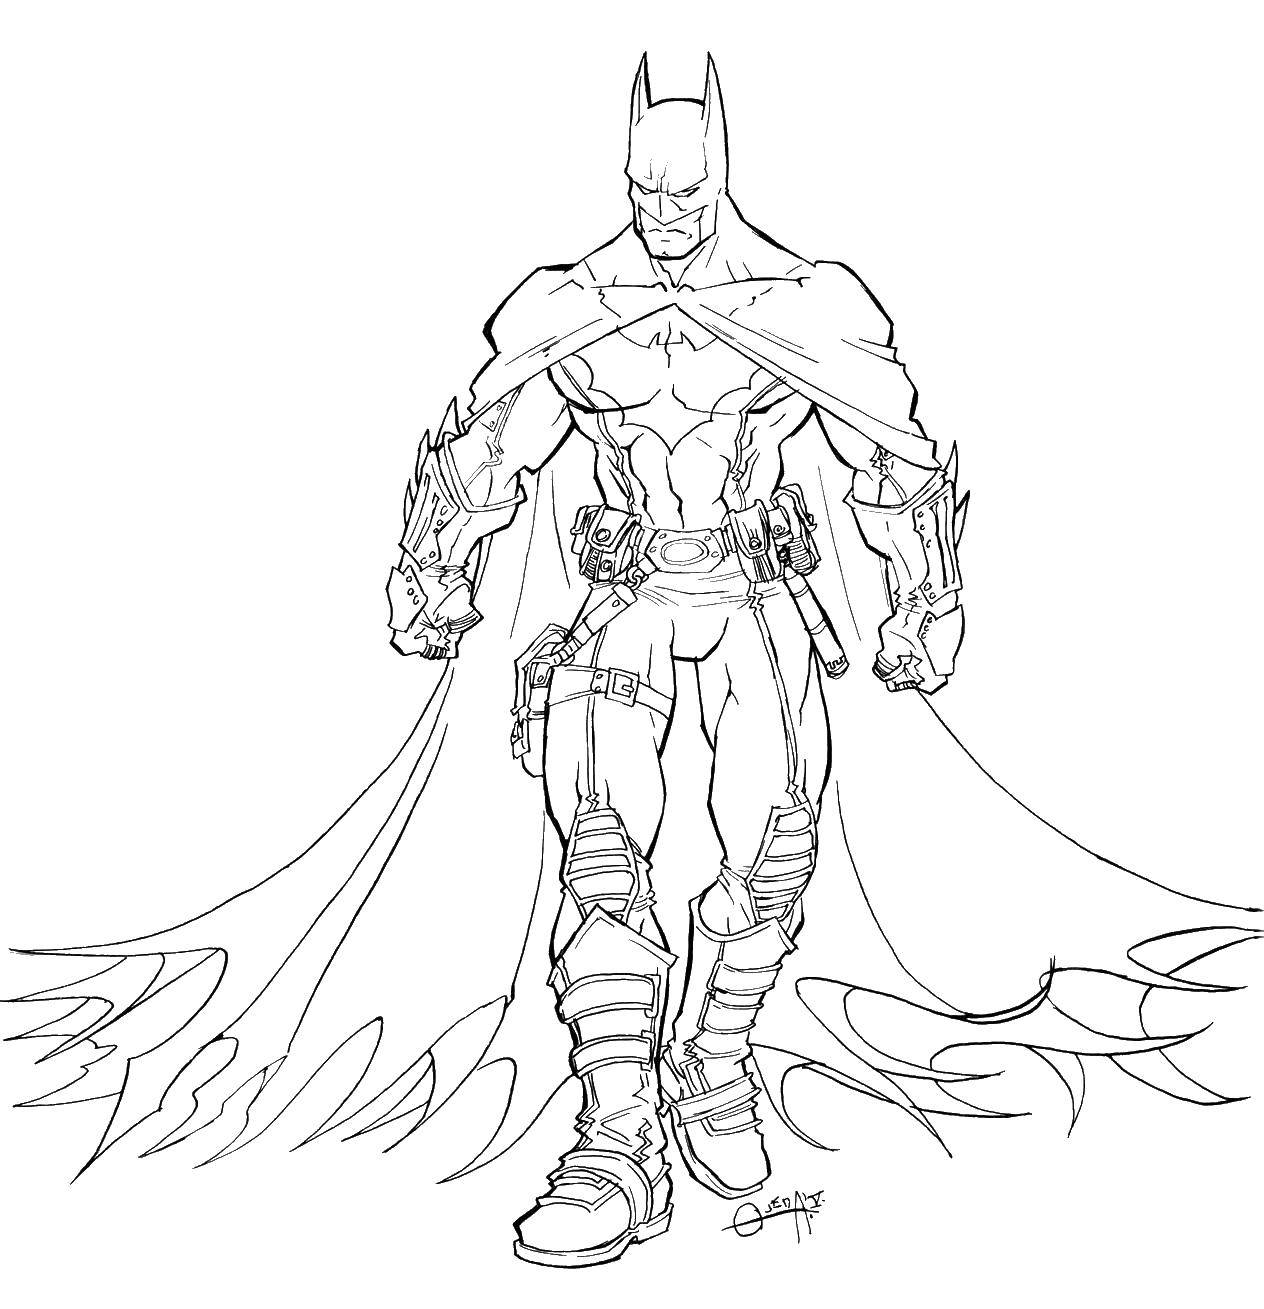 Coloring Batman in all weapons. Category Batman. Tags:  Batman, superheroes.